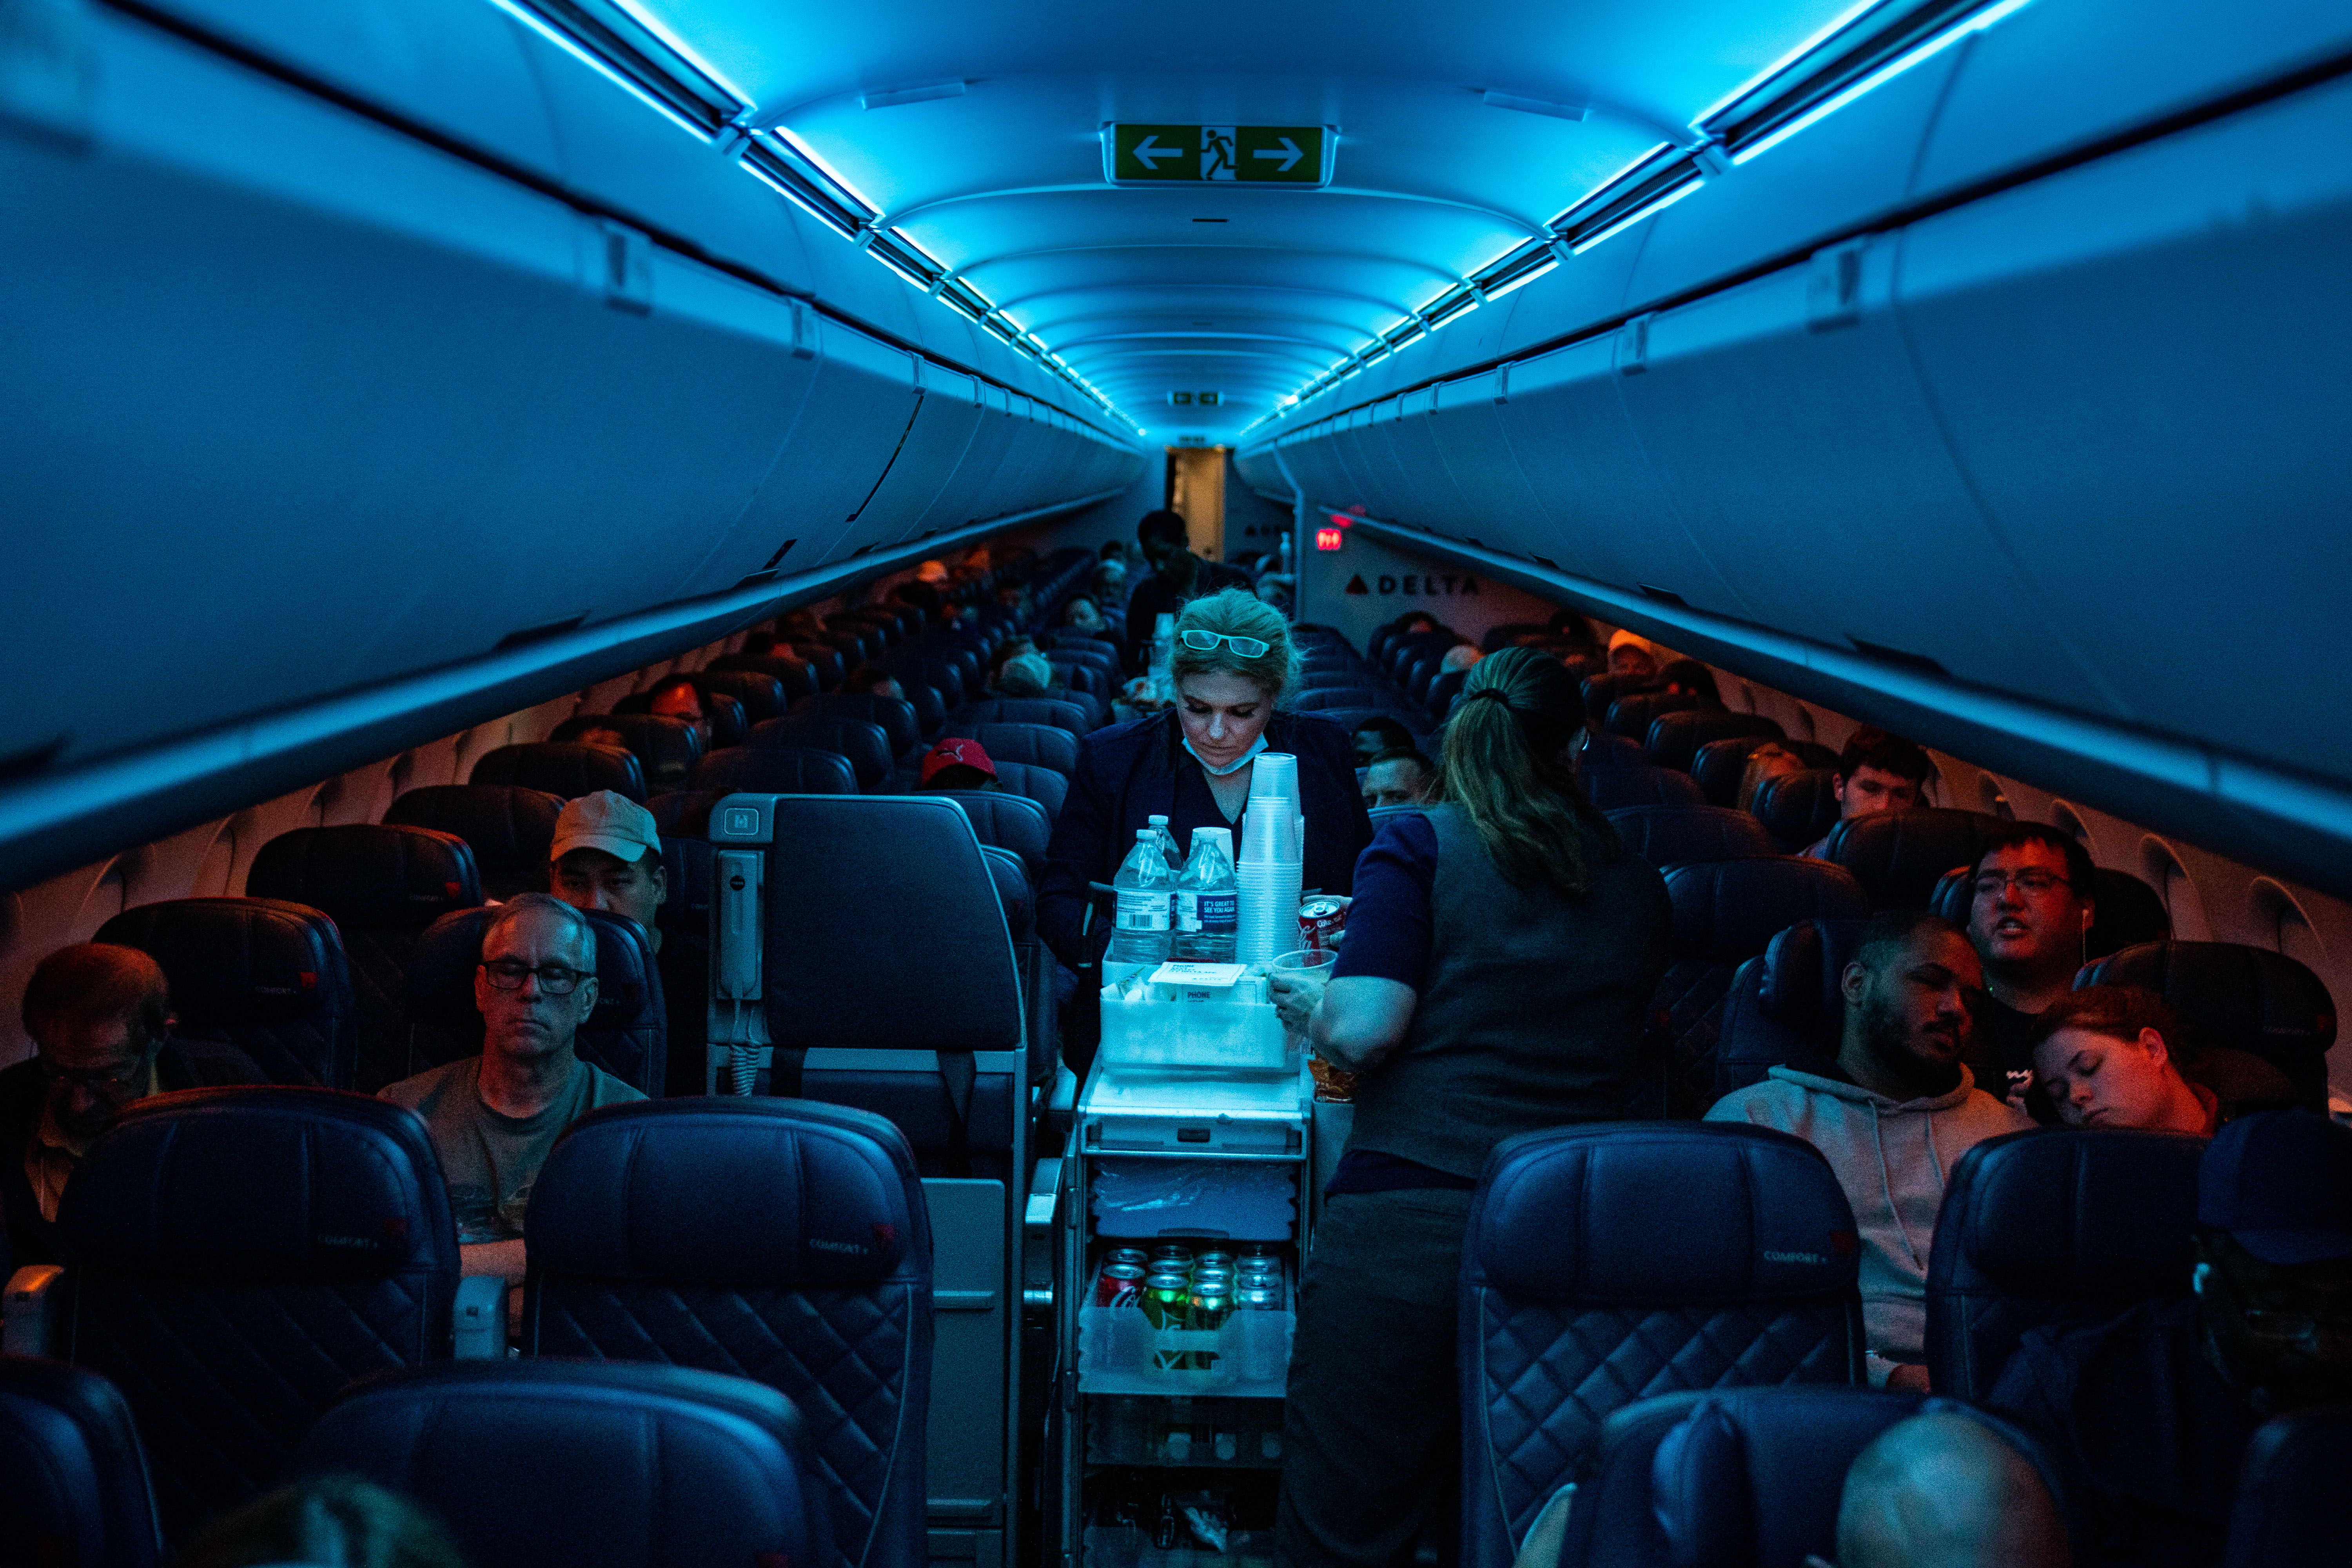 A flight attendant on an airplane.